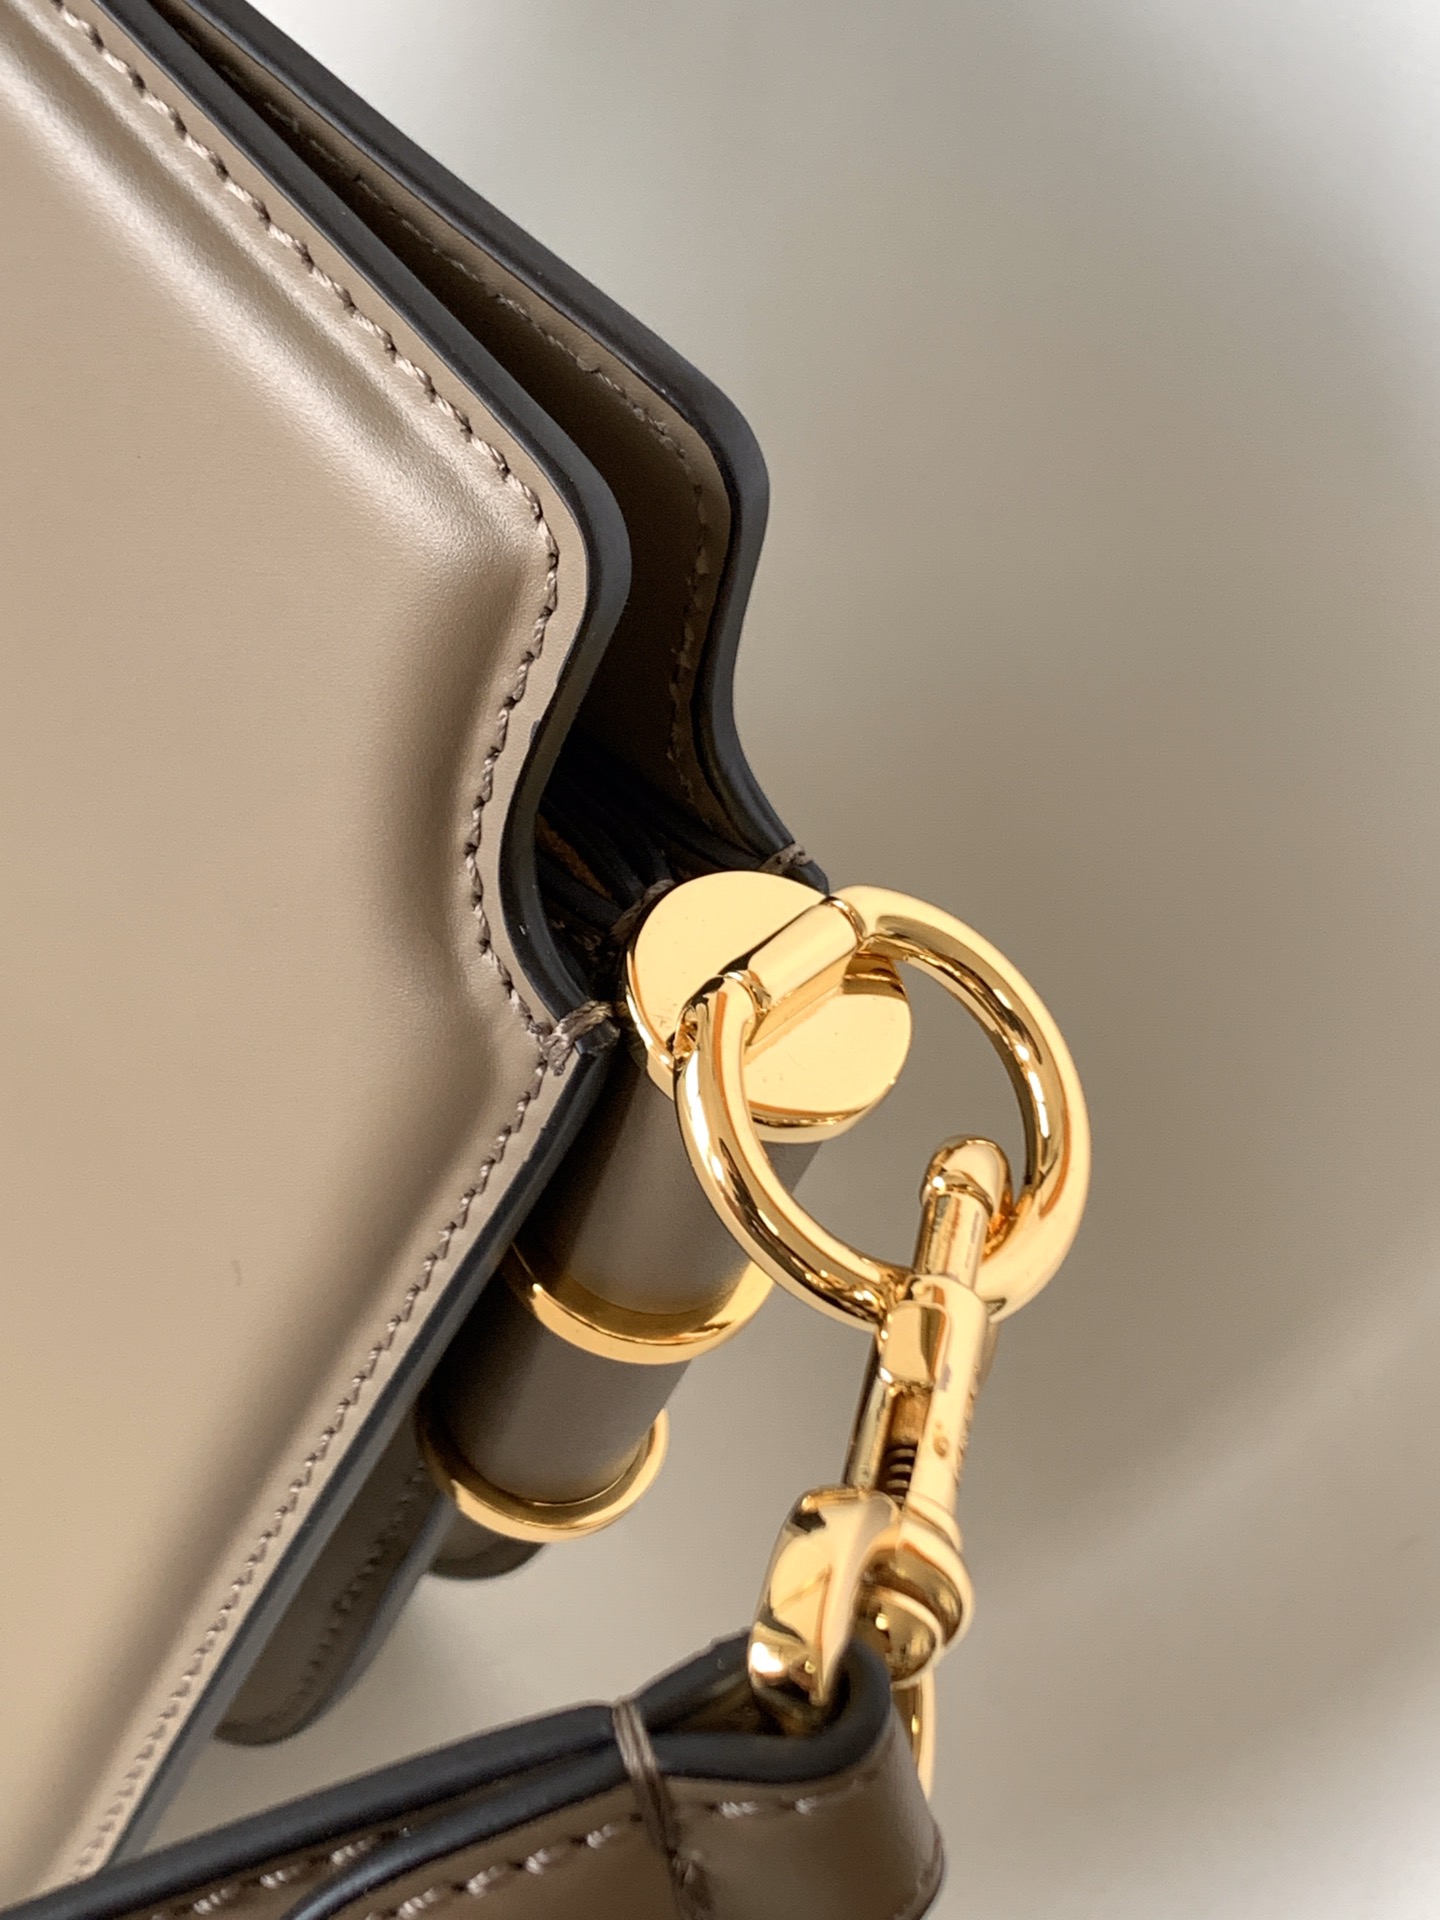 Fendtouch风琴手袋皮革材质饰有金属FF搭扣配备两个内隔层和金色金属件配肩带可肩背或斜挎Size: